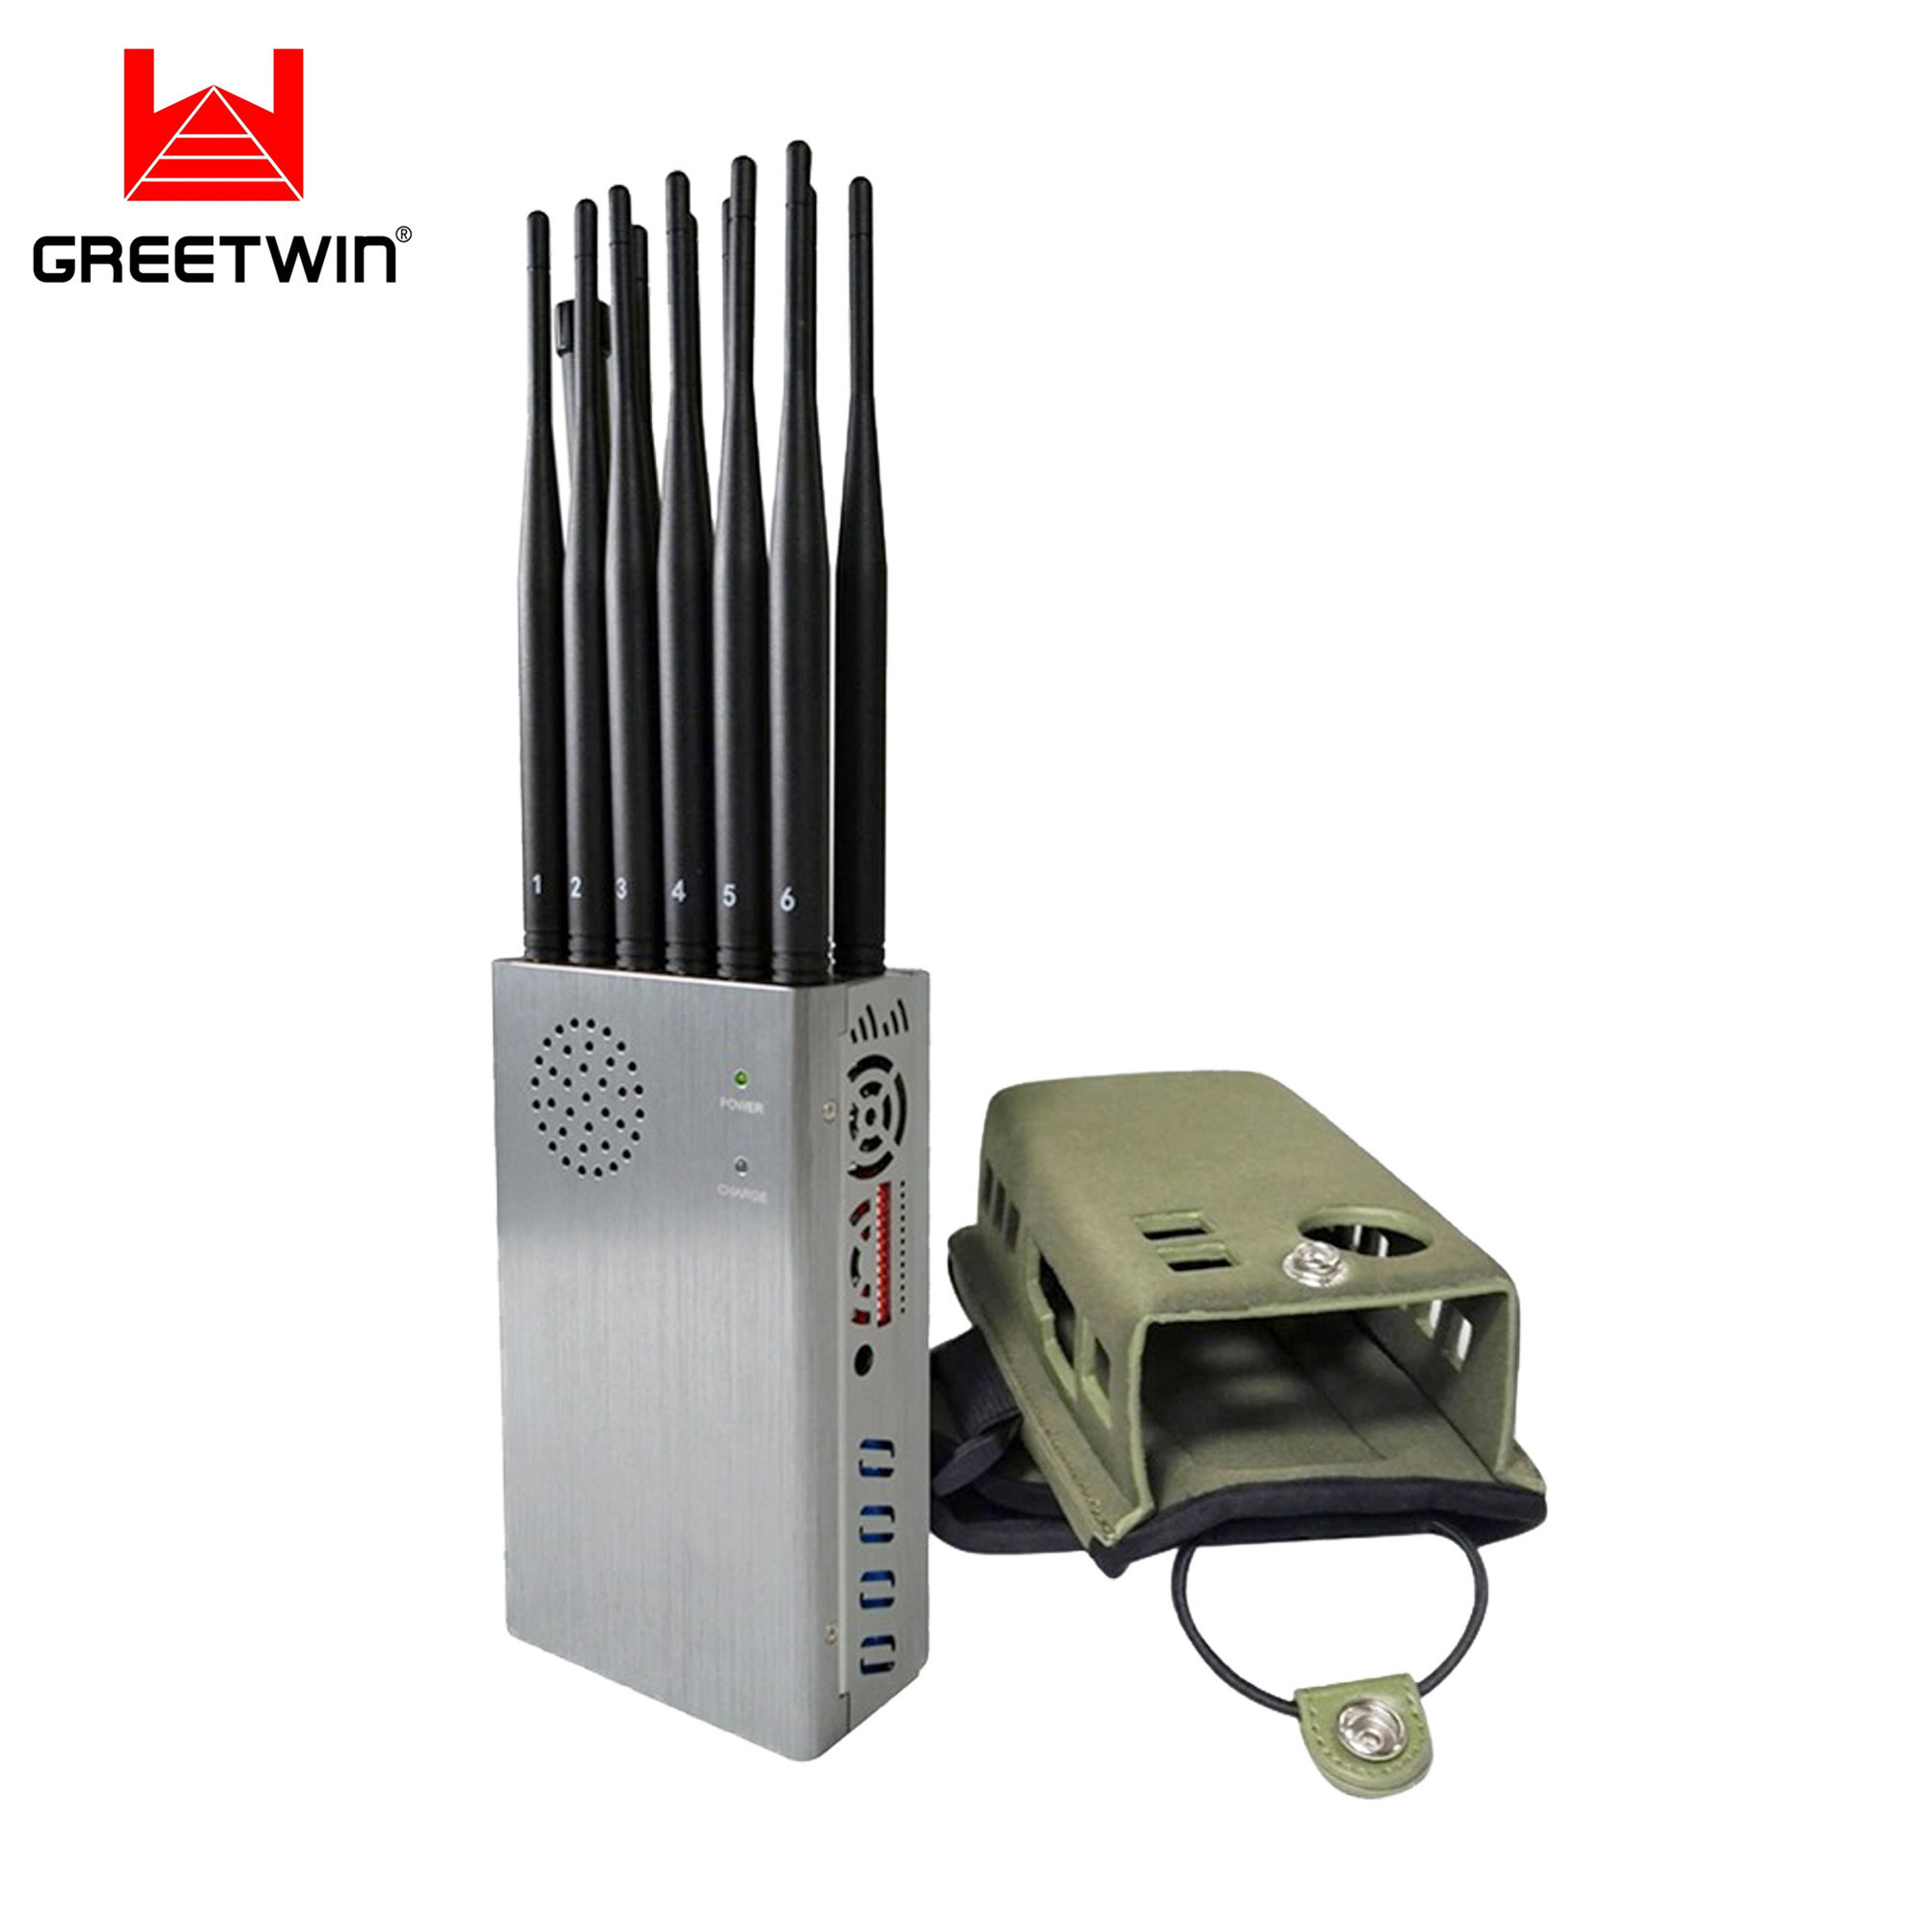 12 Channels WiFi Lojack 20m 2.5dBi VHF UHF Signal Jammer